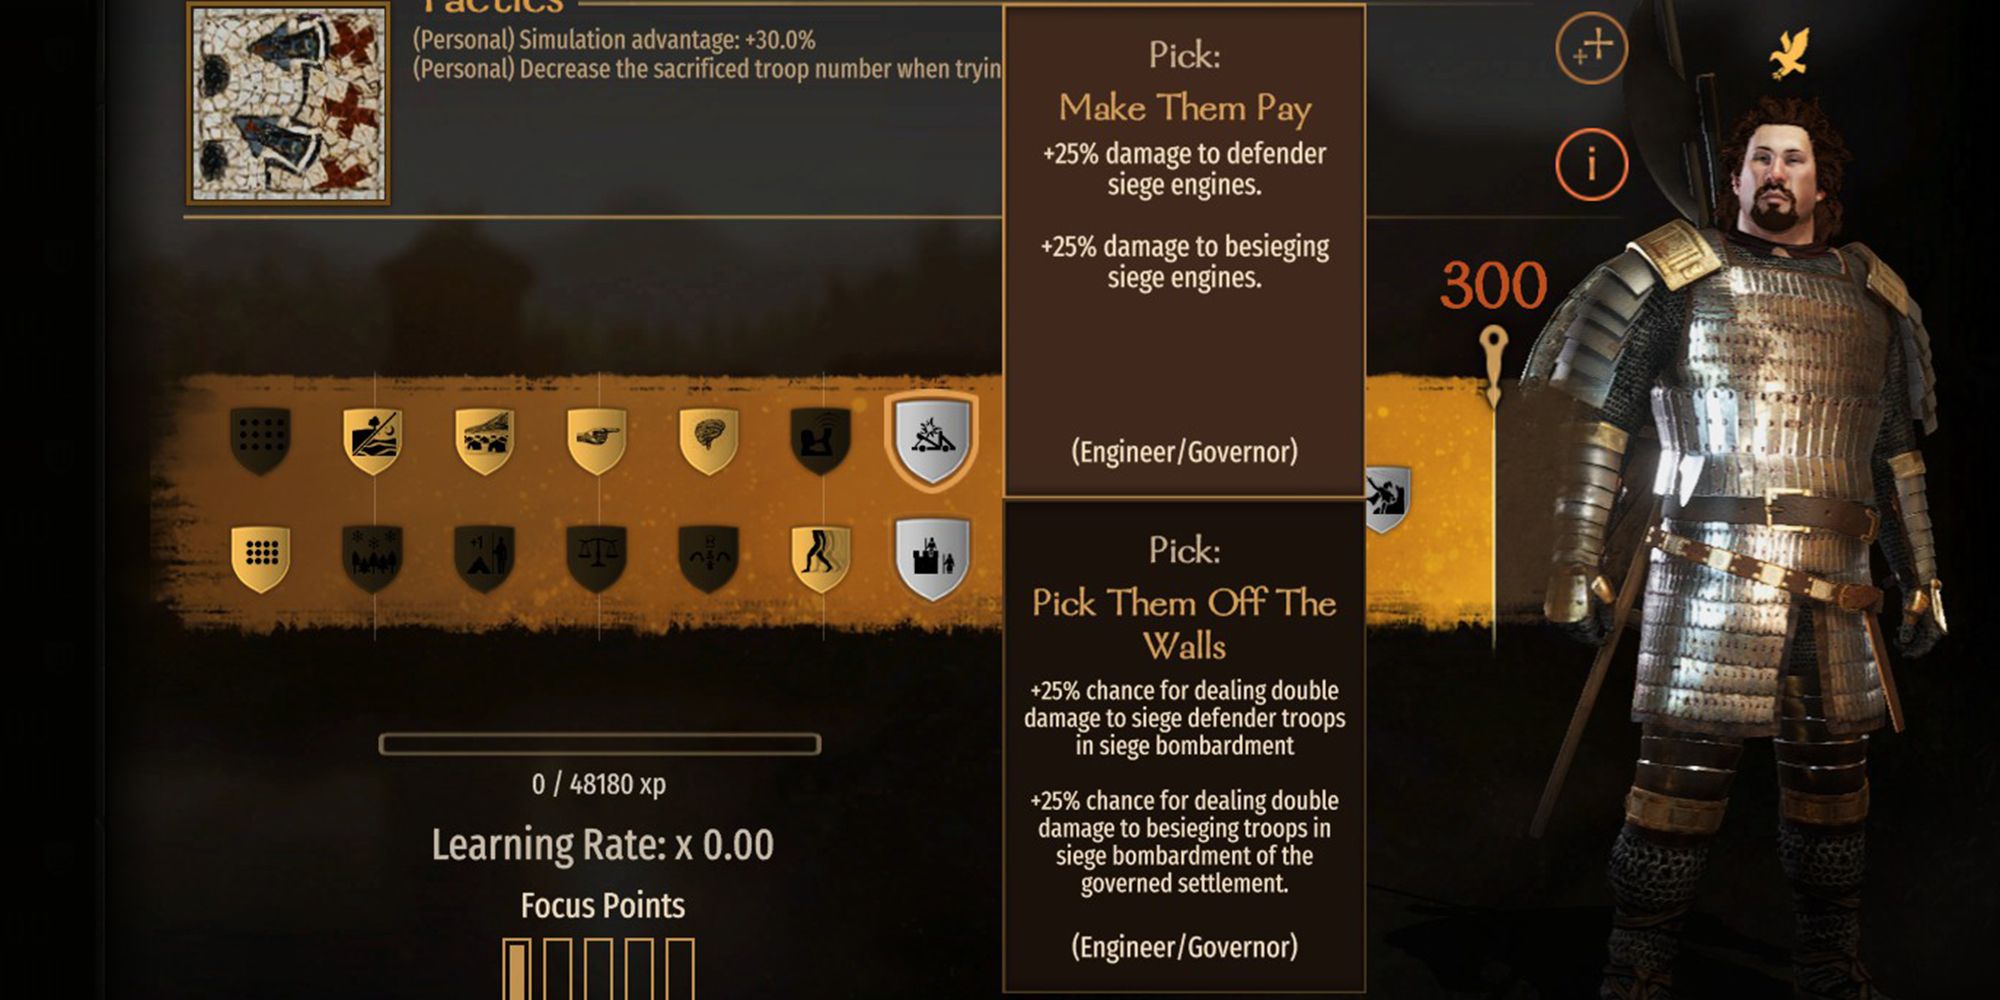 Tactics Make Them Pay Perk Menu Description +25% damage to defender siege engines. +25% damage to besieging siege engines.